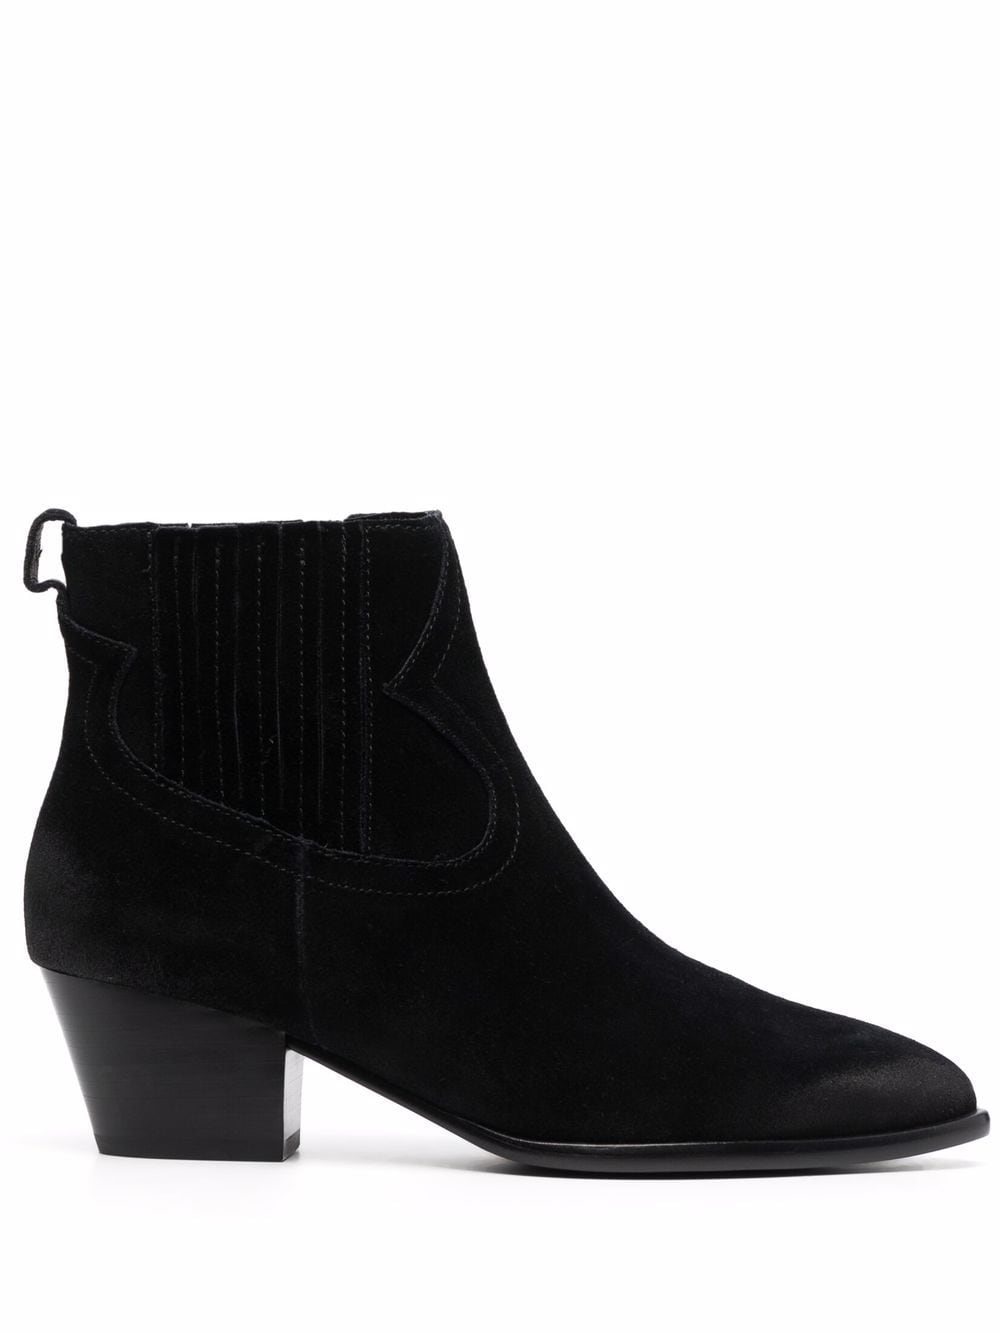 Ash Harper pointed-toe stacked-heel ankle boots - Black von Ash